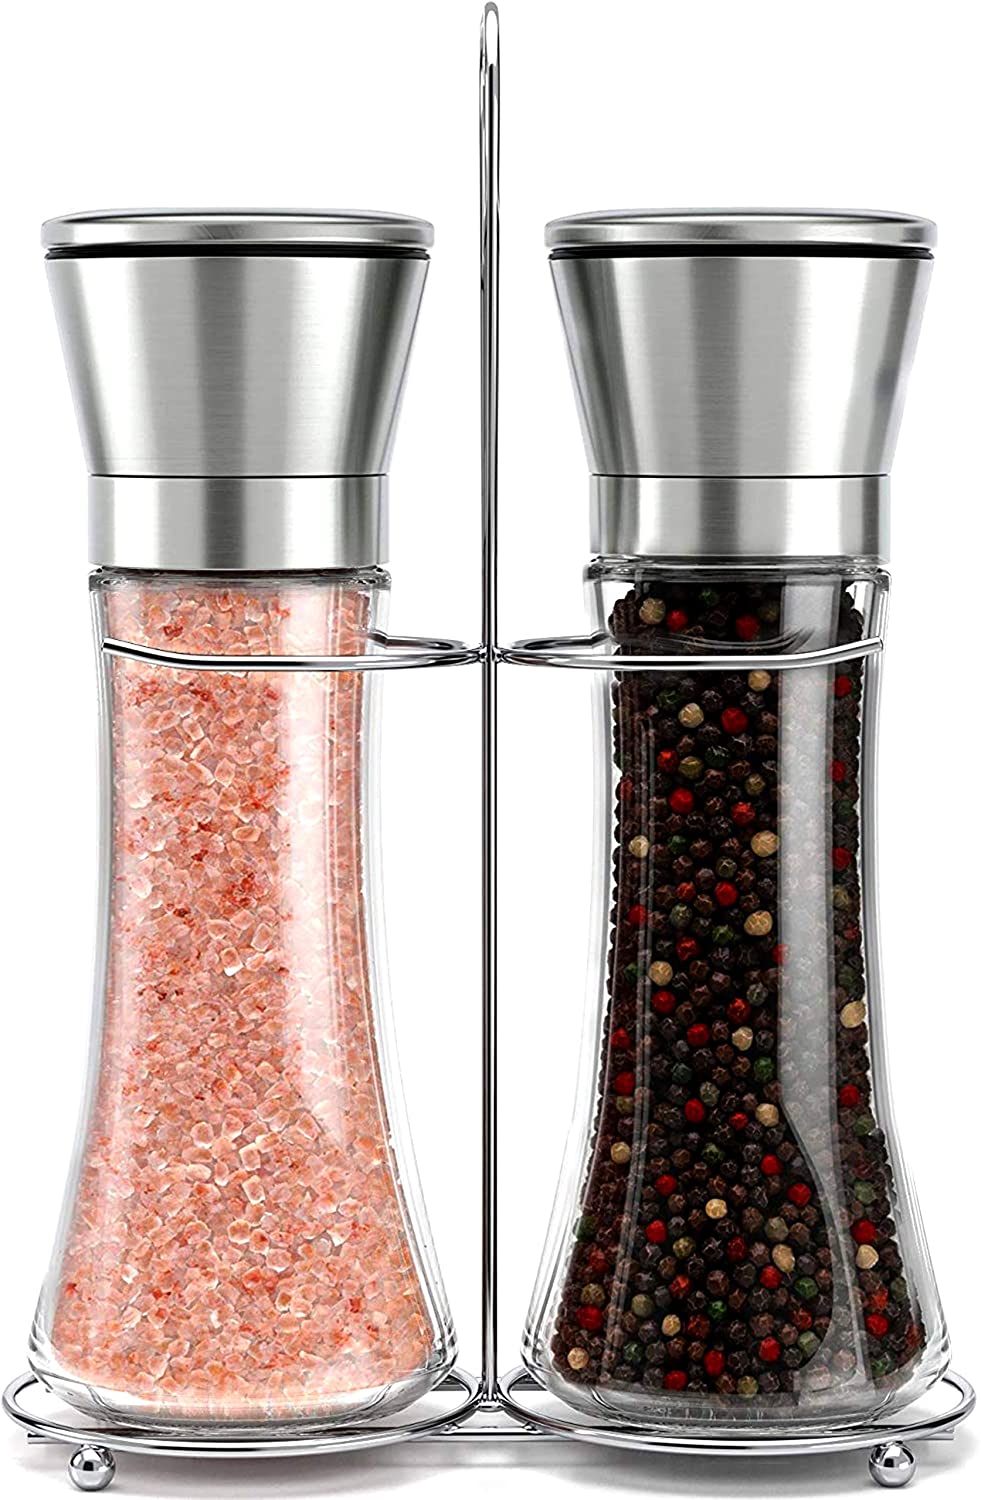 https://www.dontwasteyourmoney.com/wp-content/uploads/2020/03/willow-everett-stainless-refillable-salt-and-pepper-grinder-set-salt-and-pepper-grinder-set.jpg